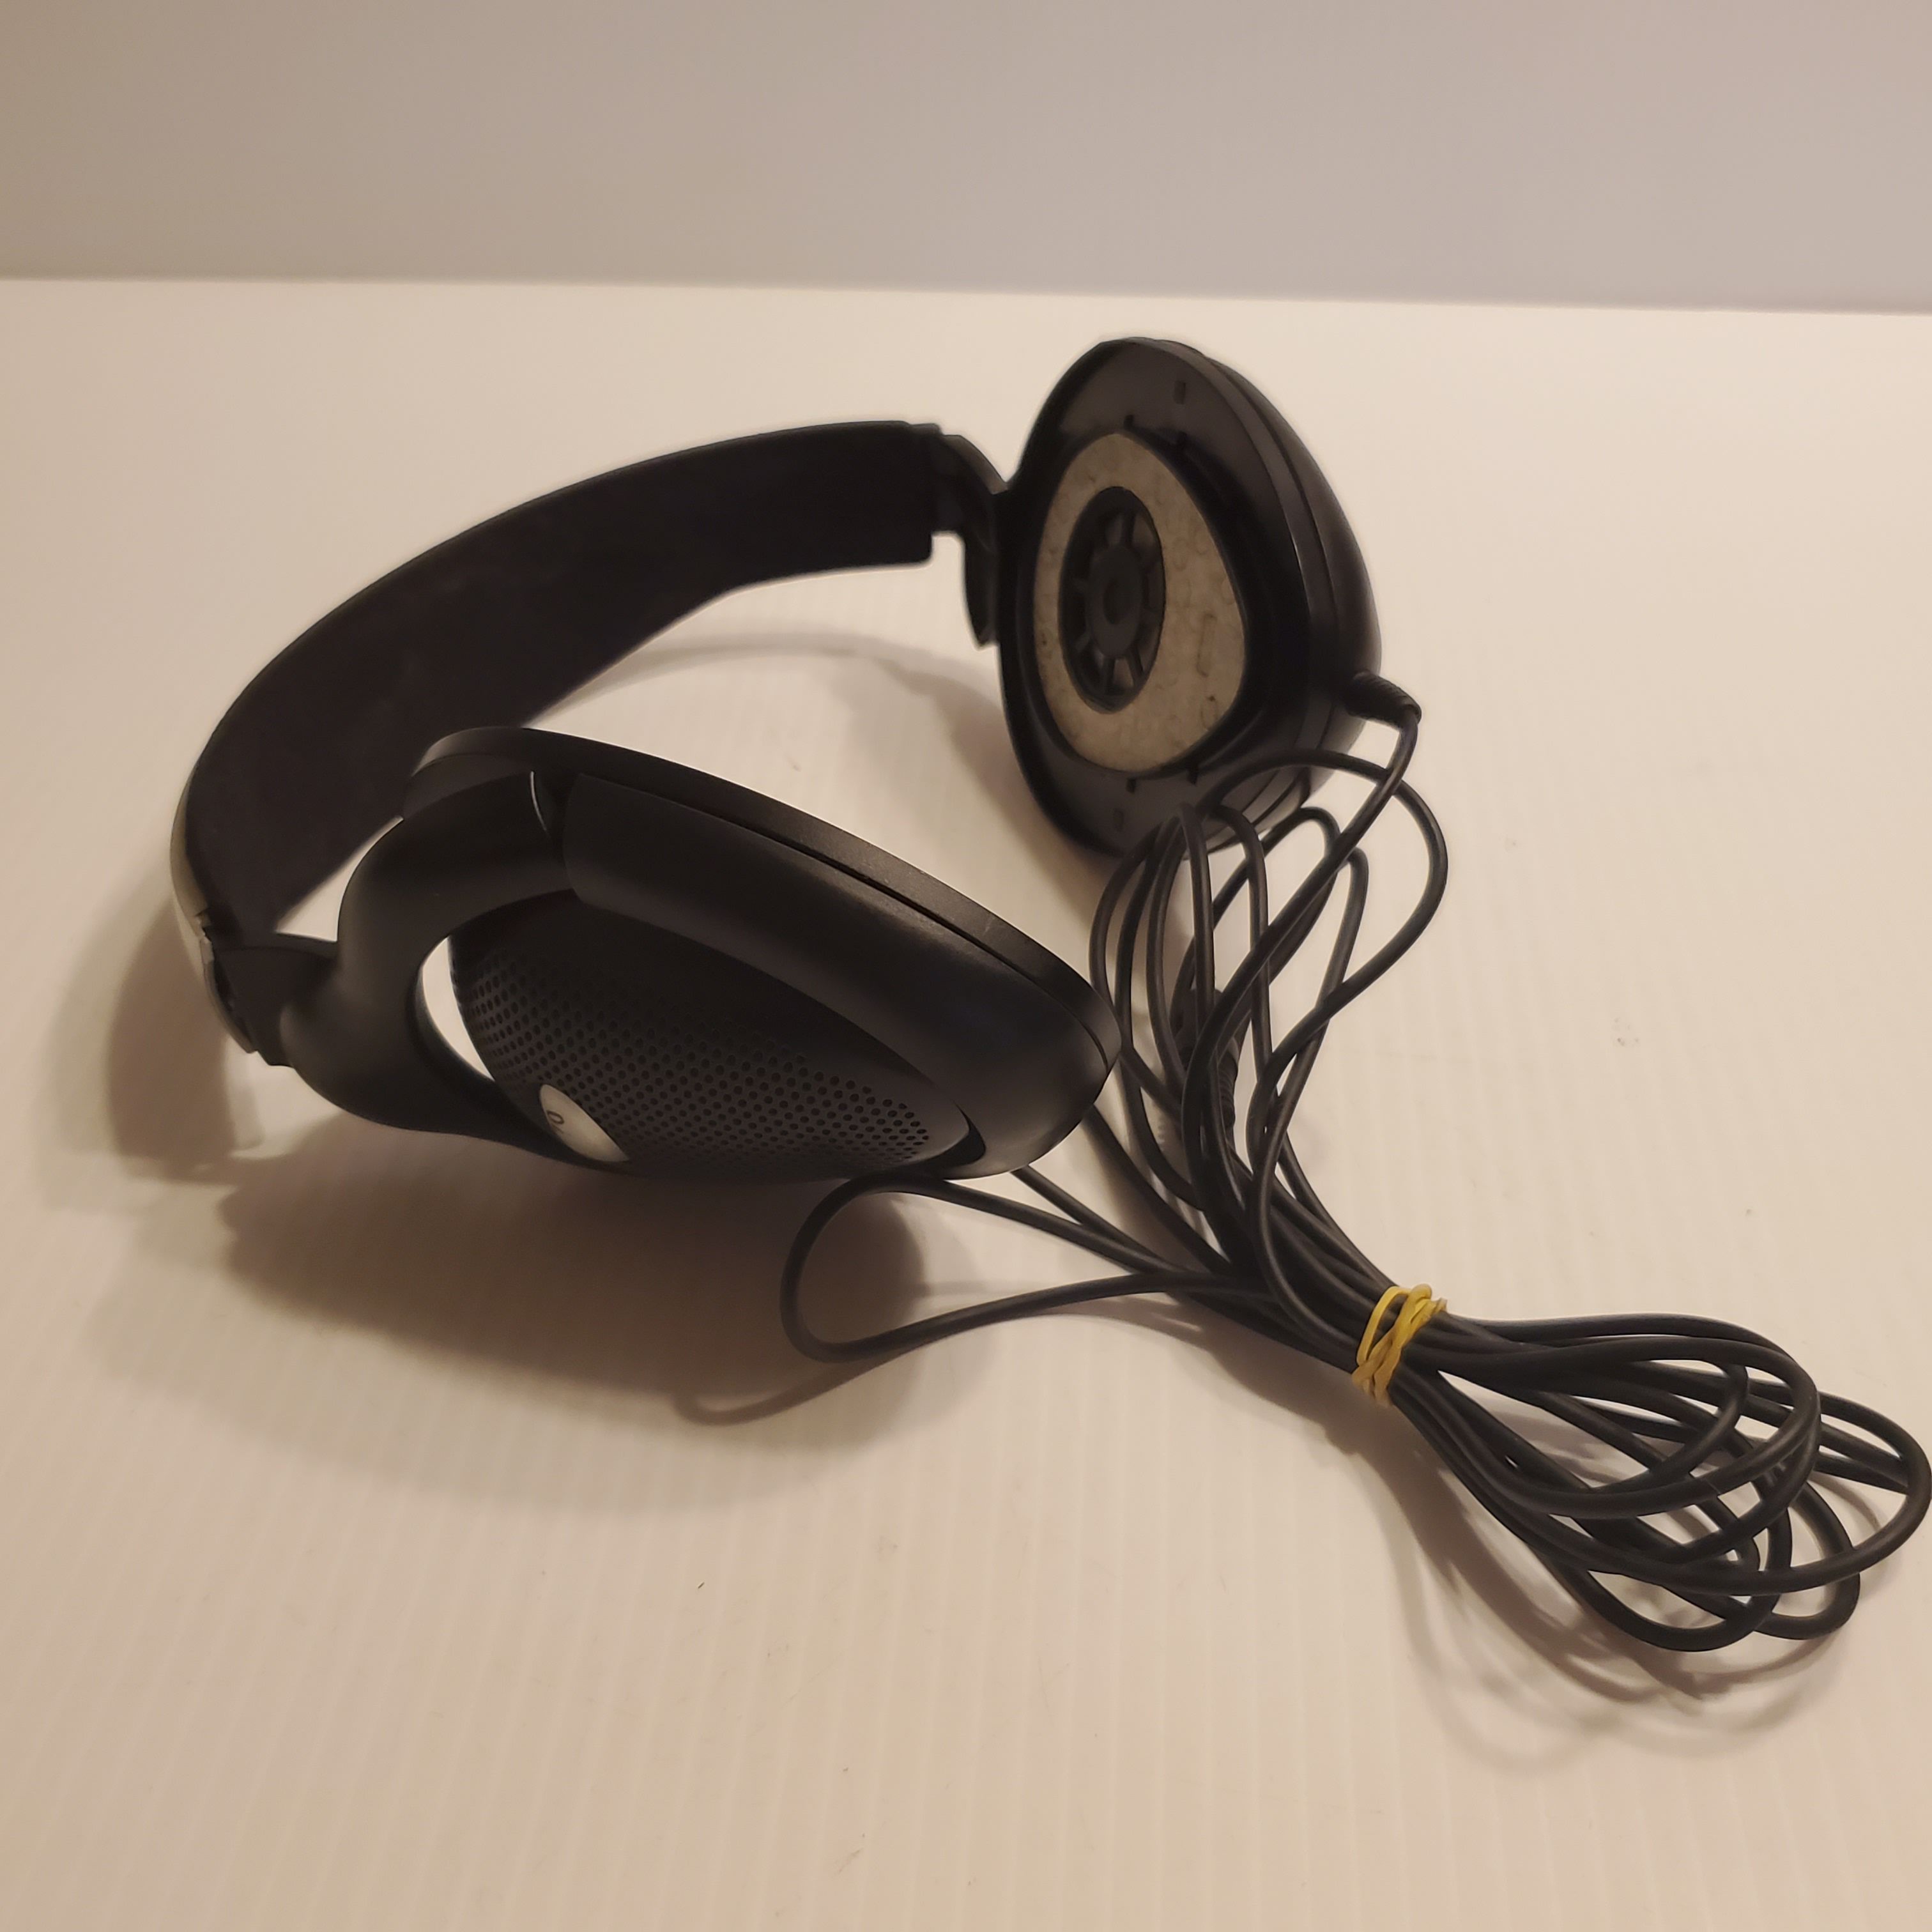 Sennheiser HD570 Stereo headphones